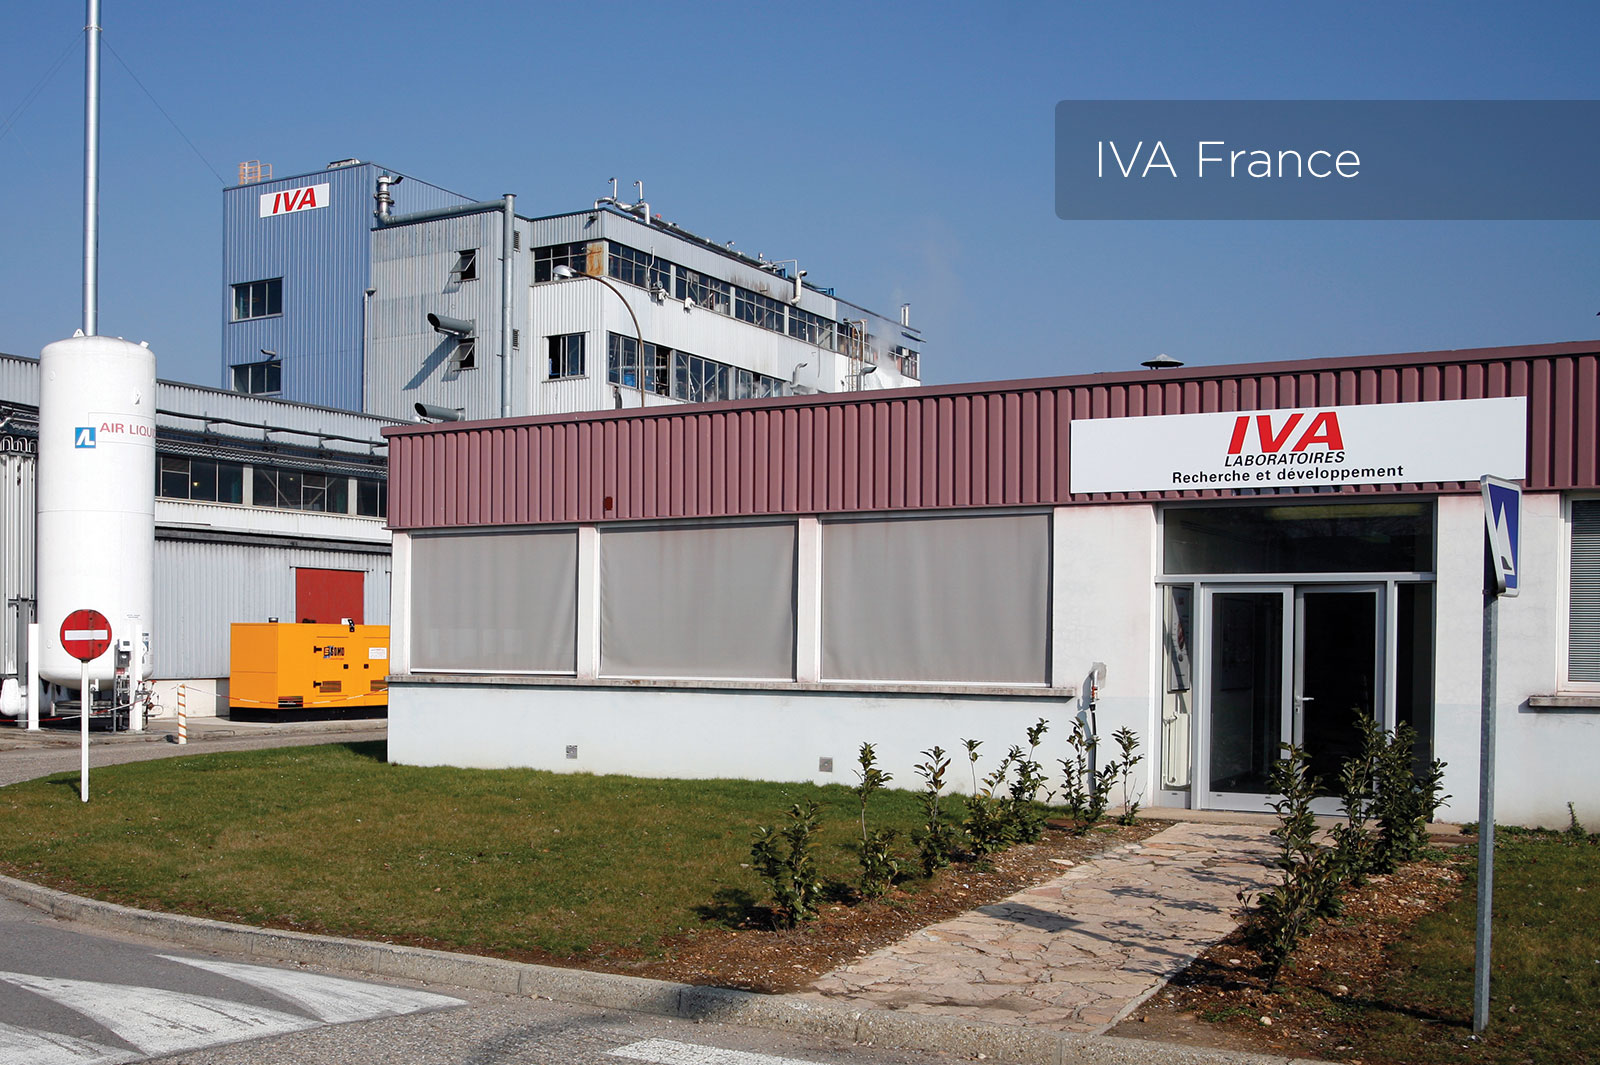 IVA France